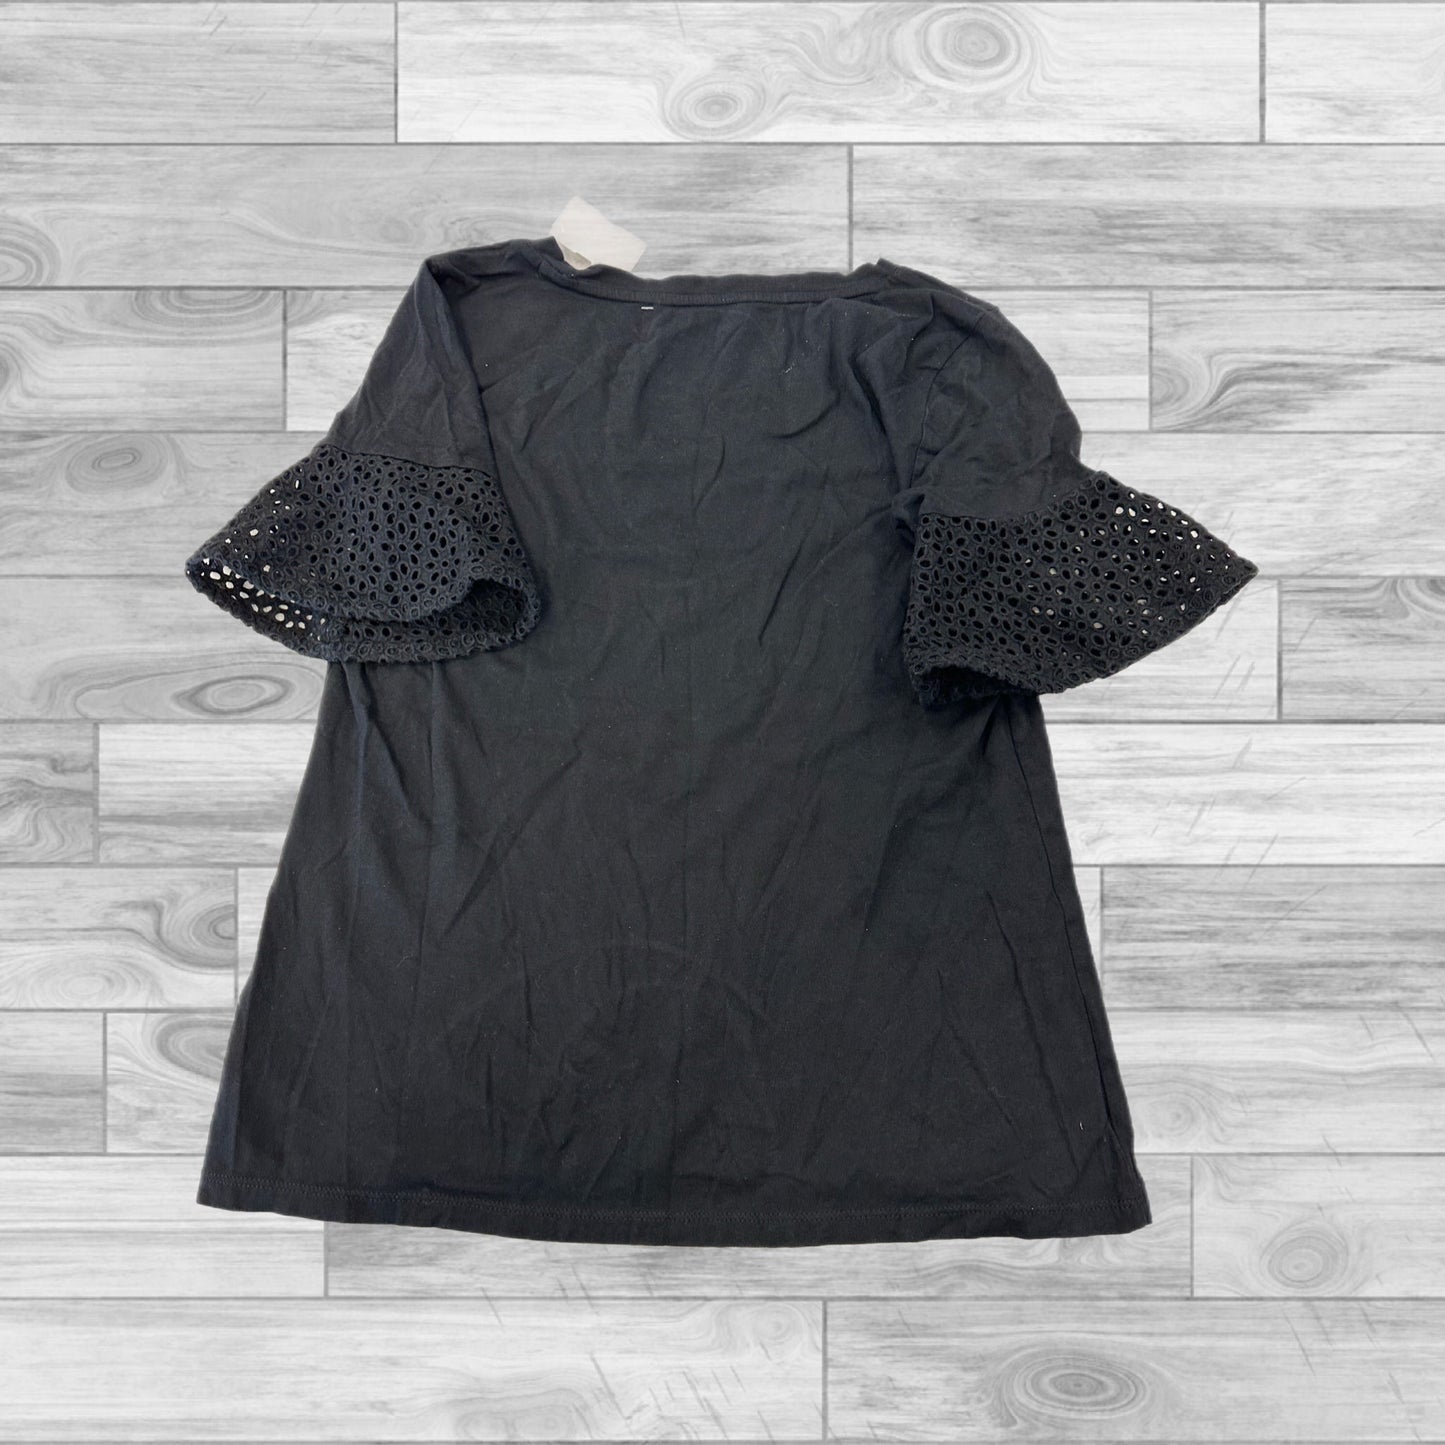 Black Top Short Sleeve Talbots, Size M